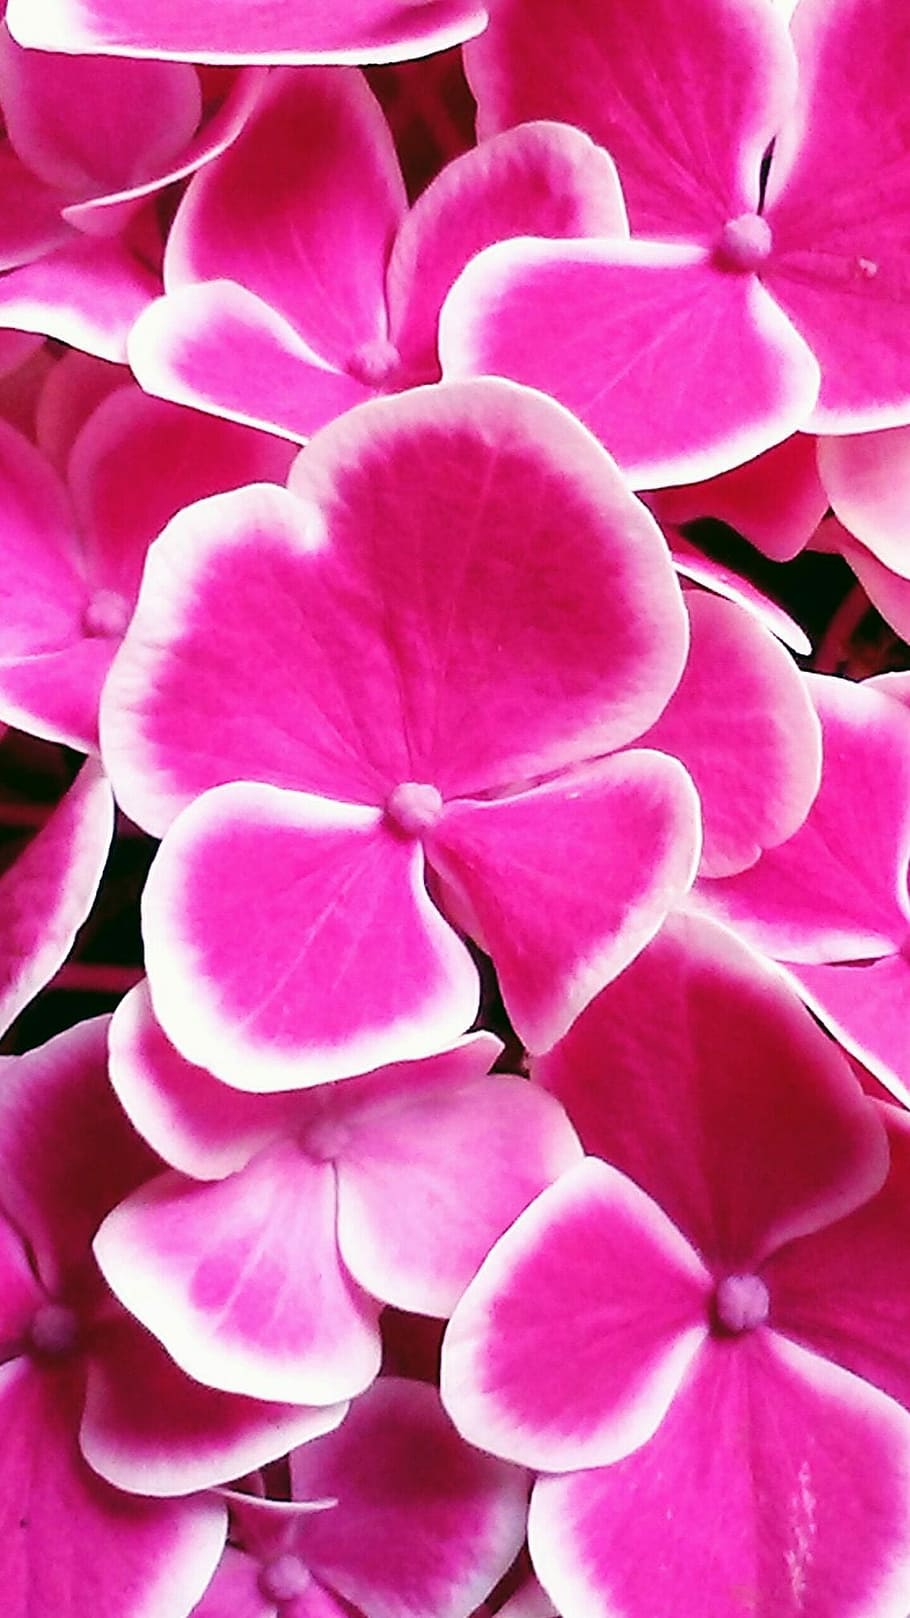 hydrangea, flower, fuchsia, pink color, flowering plant, beauty in nature, plant, petal, vulnerability, freshness